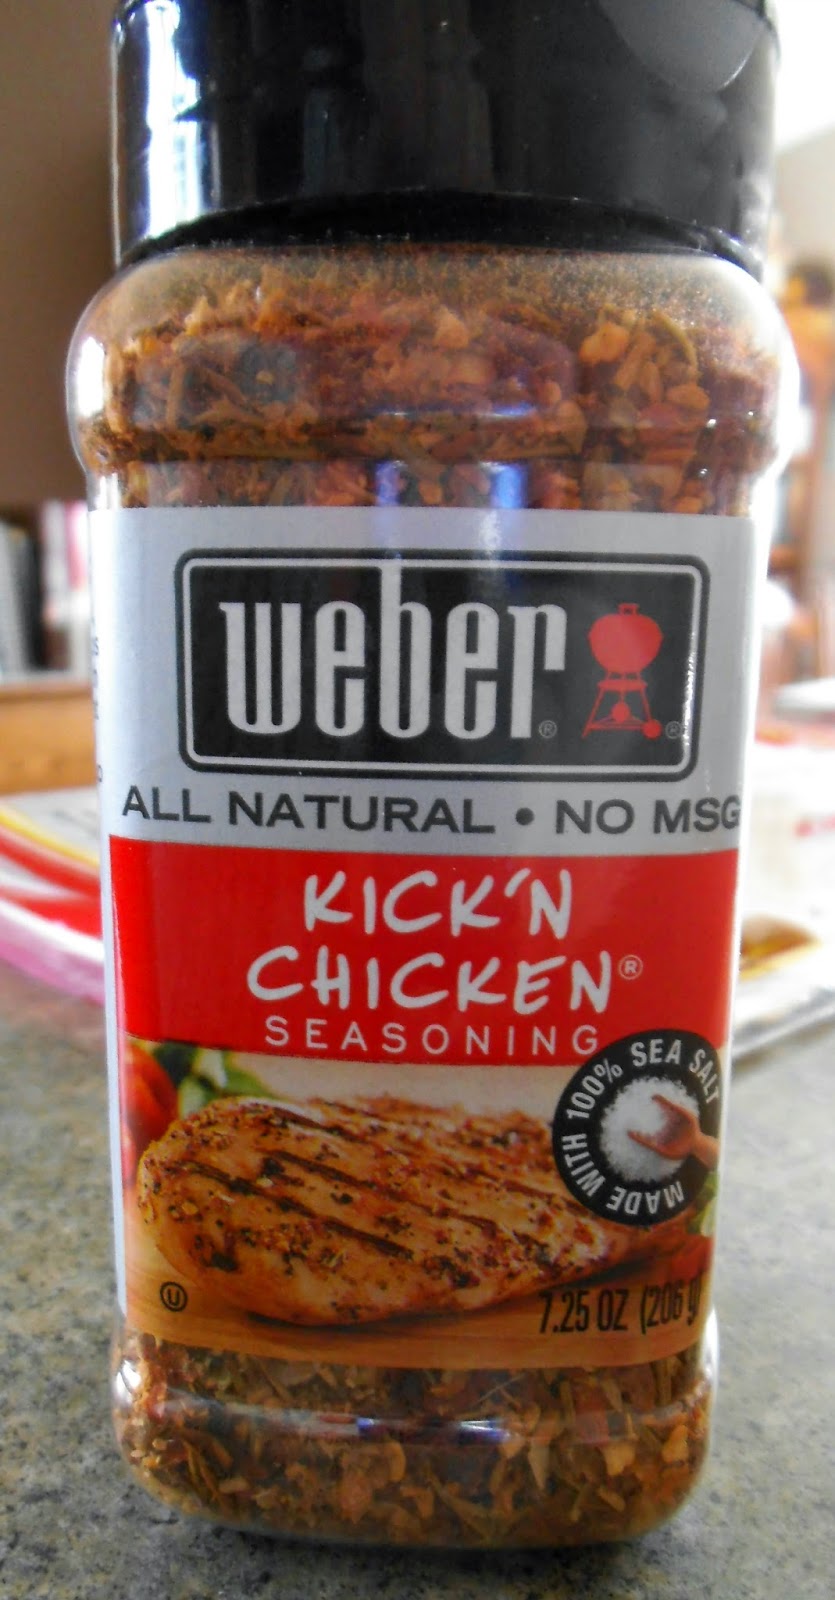 Weber Seasoning, Kick'n Chicken - 11 oz